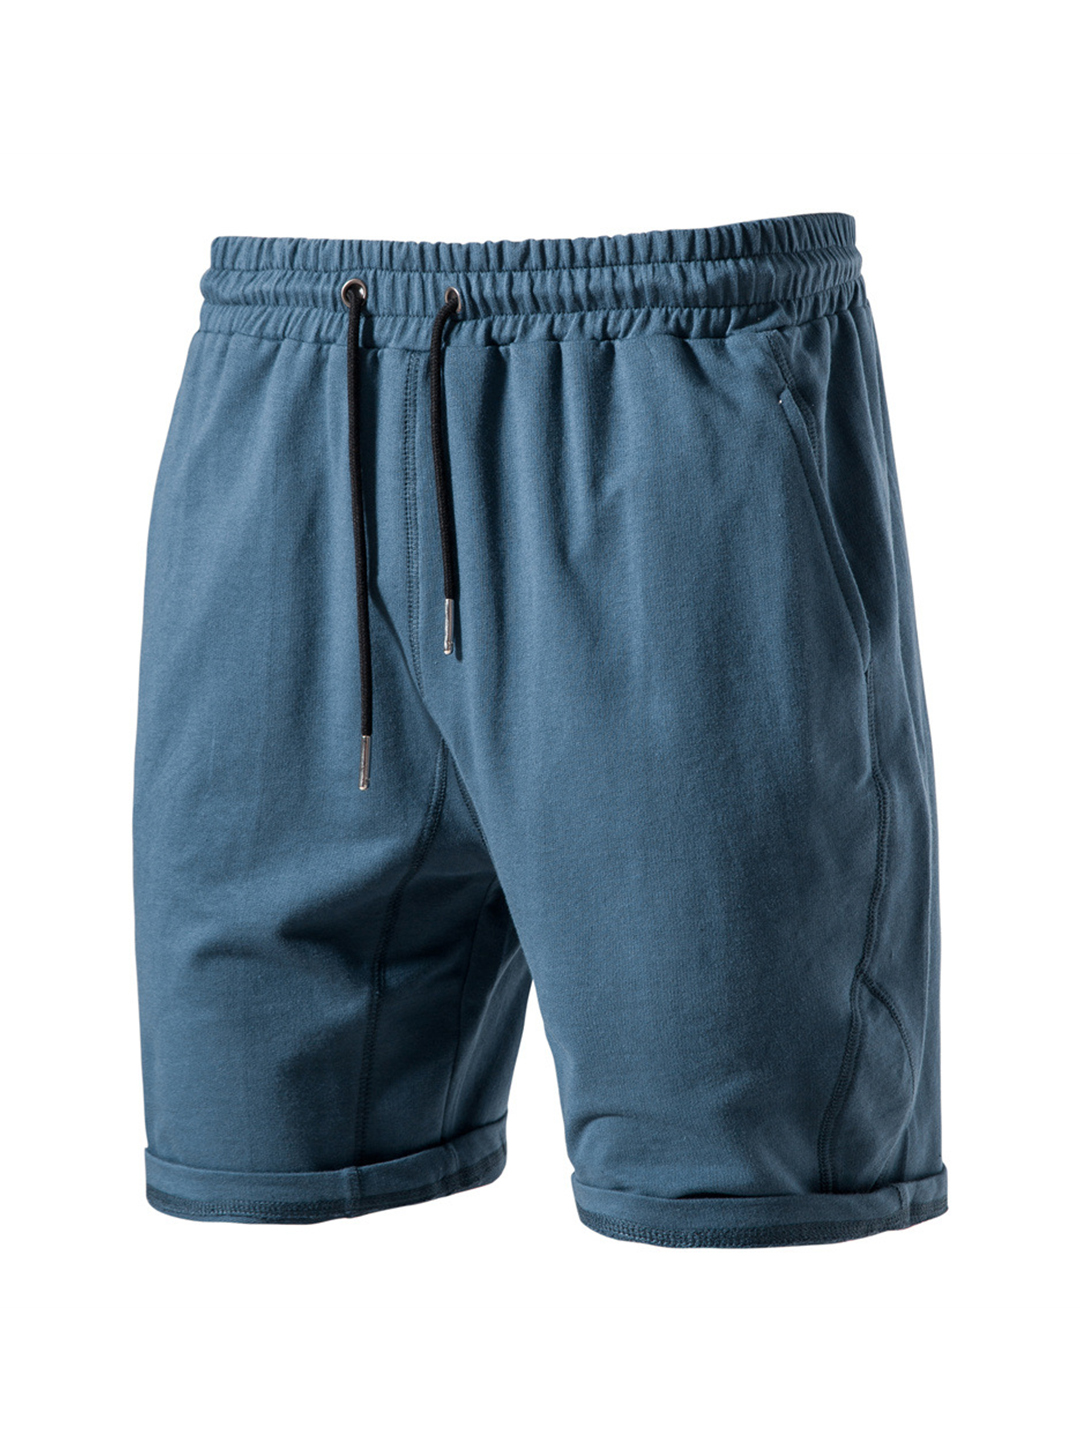 Men's Cotton Casual Sports Shorts